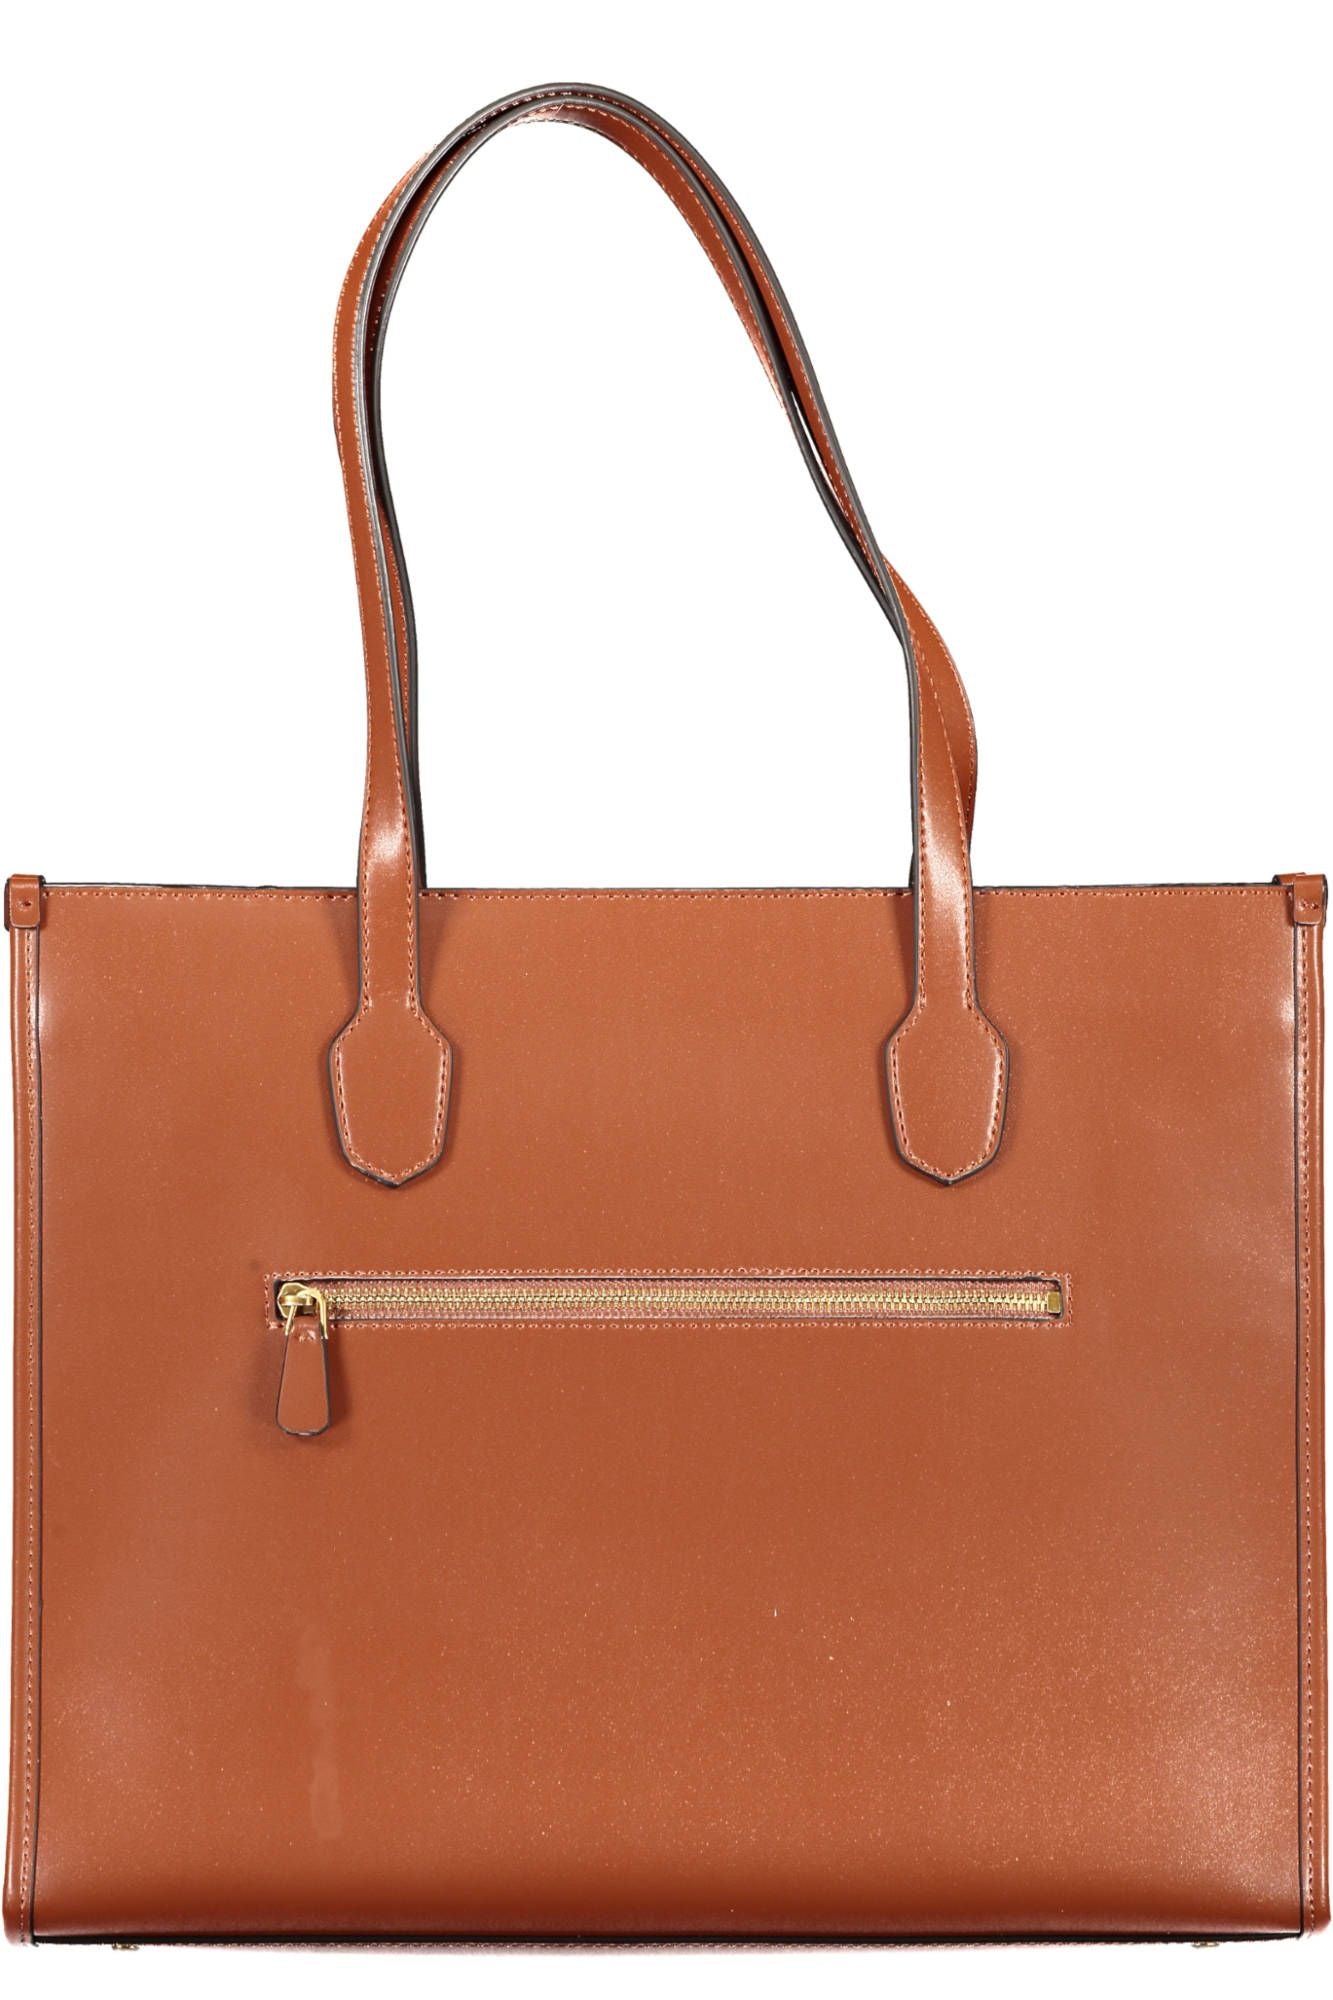 Chic Polyurethane Handbag with Versatile Pockets